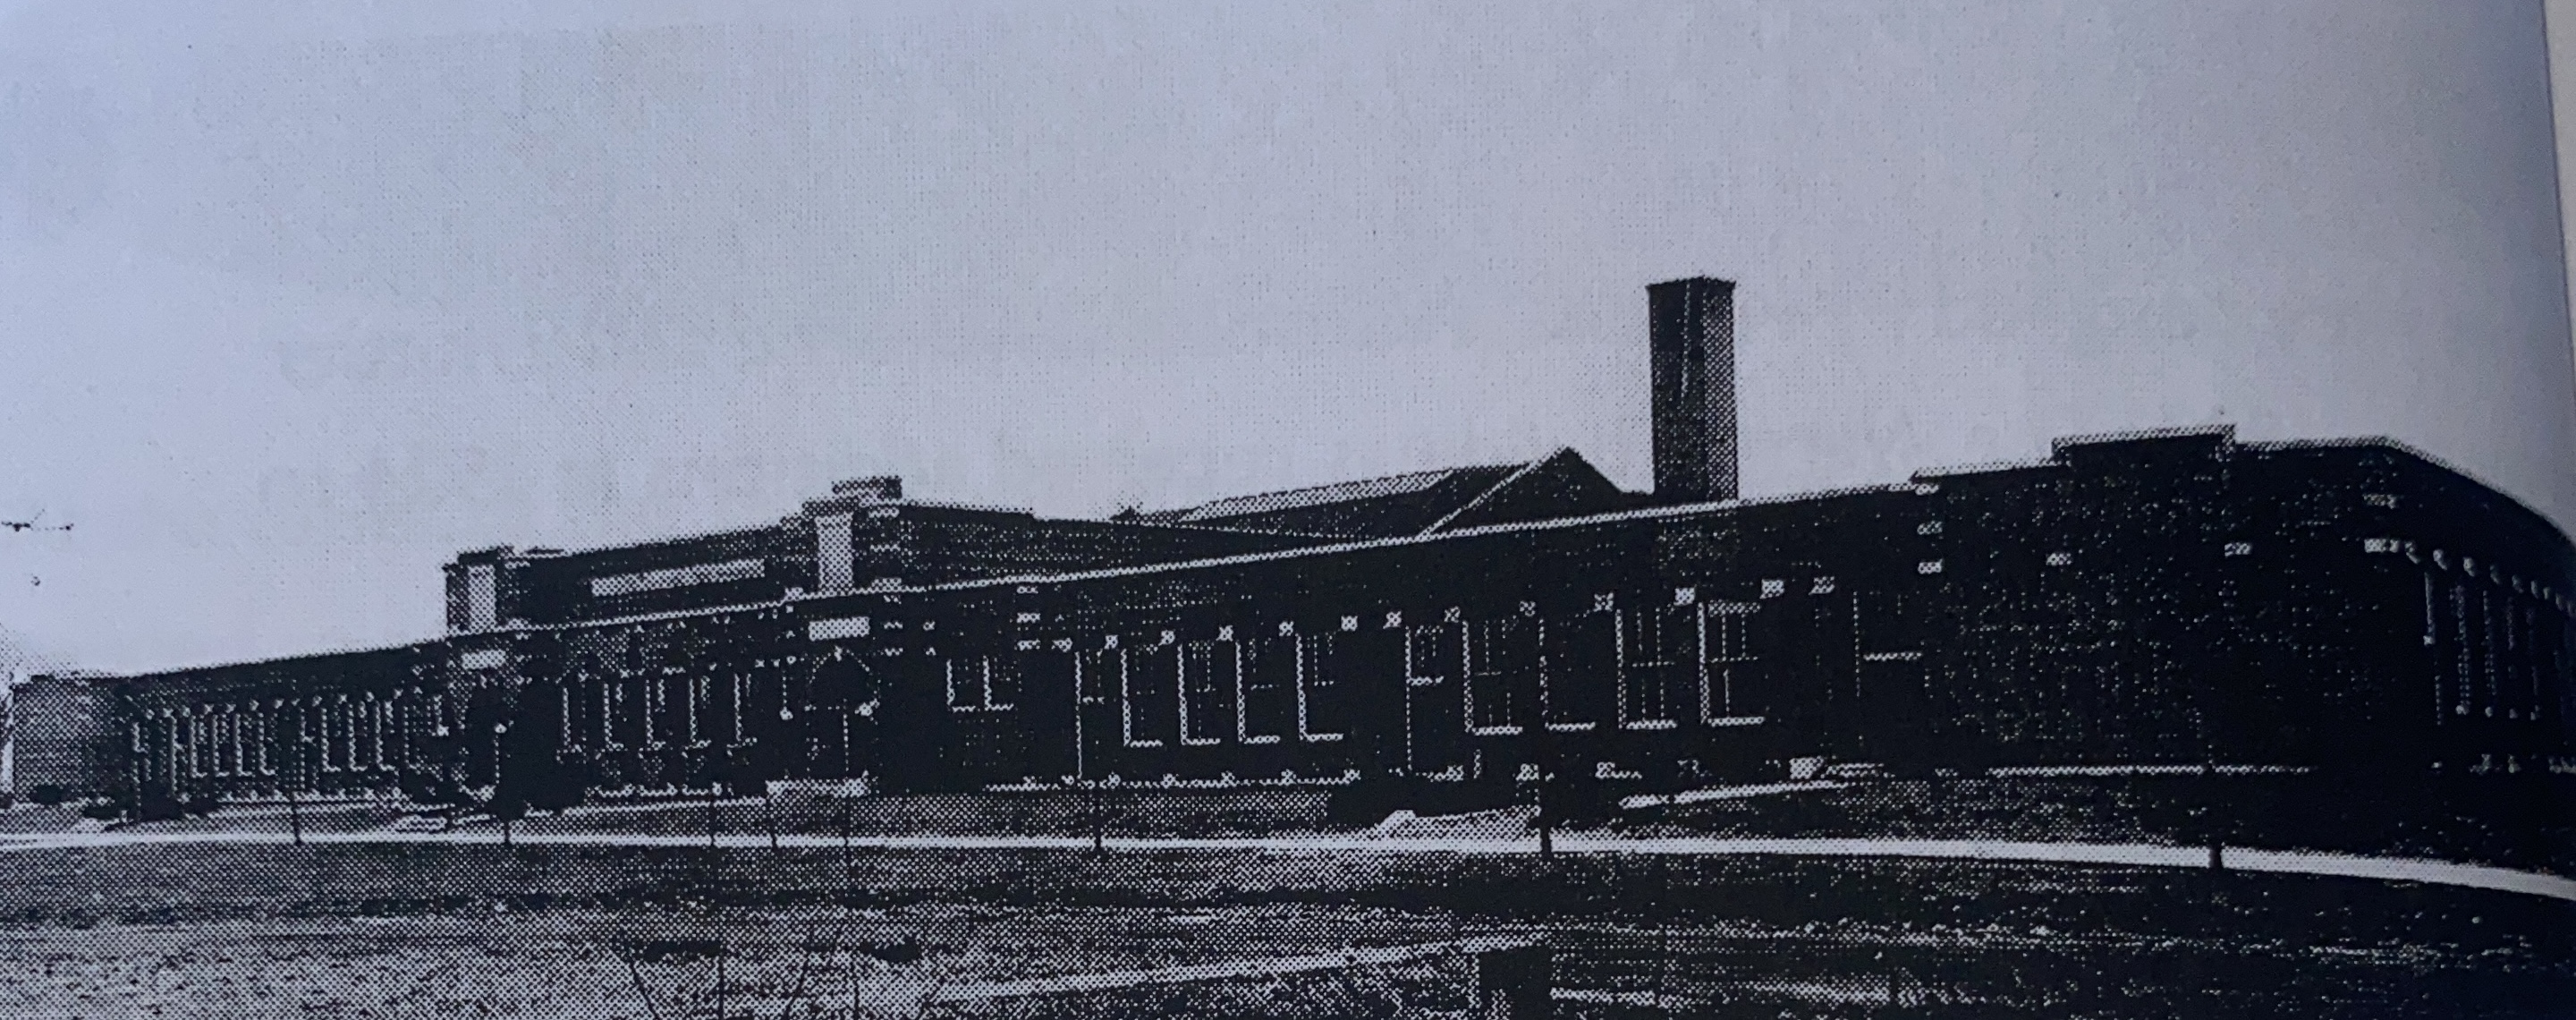 outside of Longfellow building in 1921